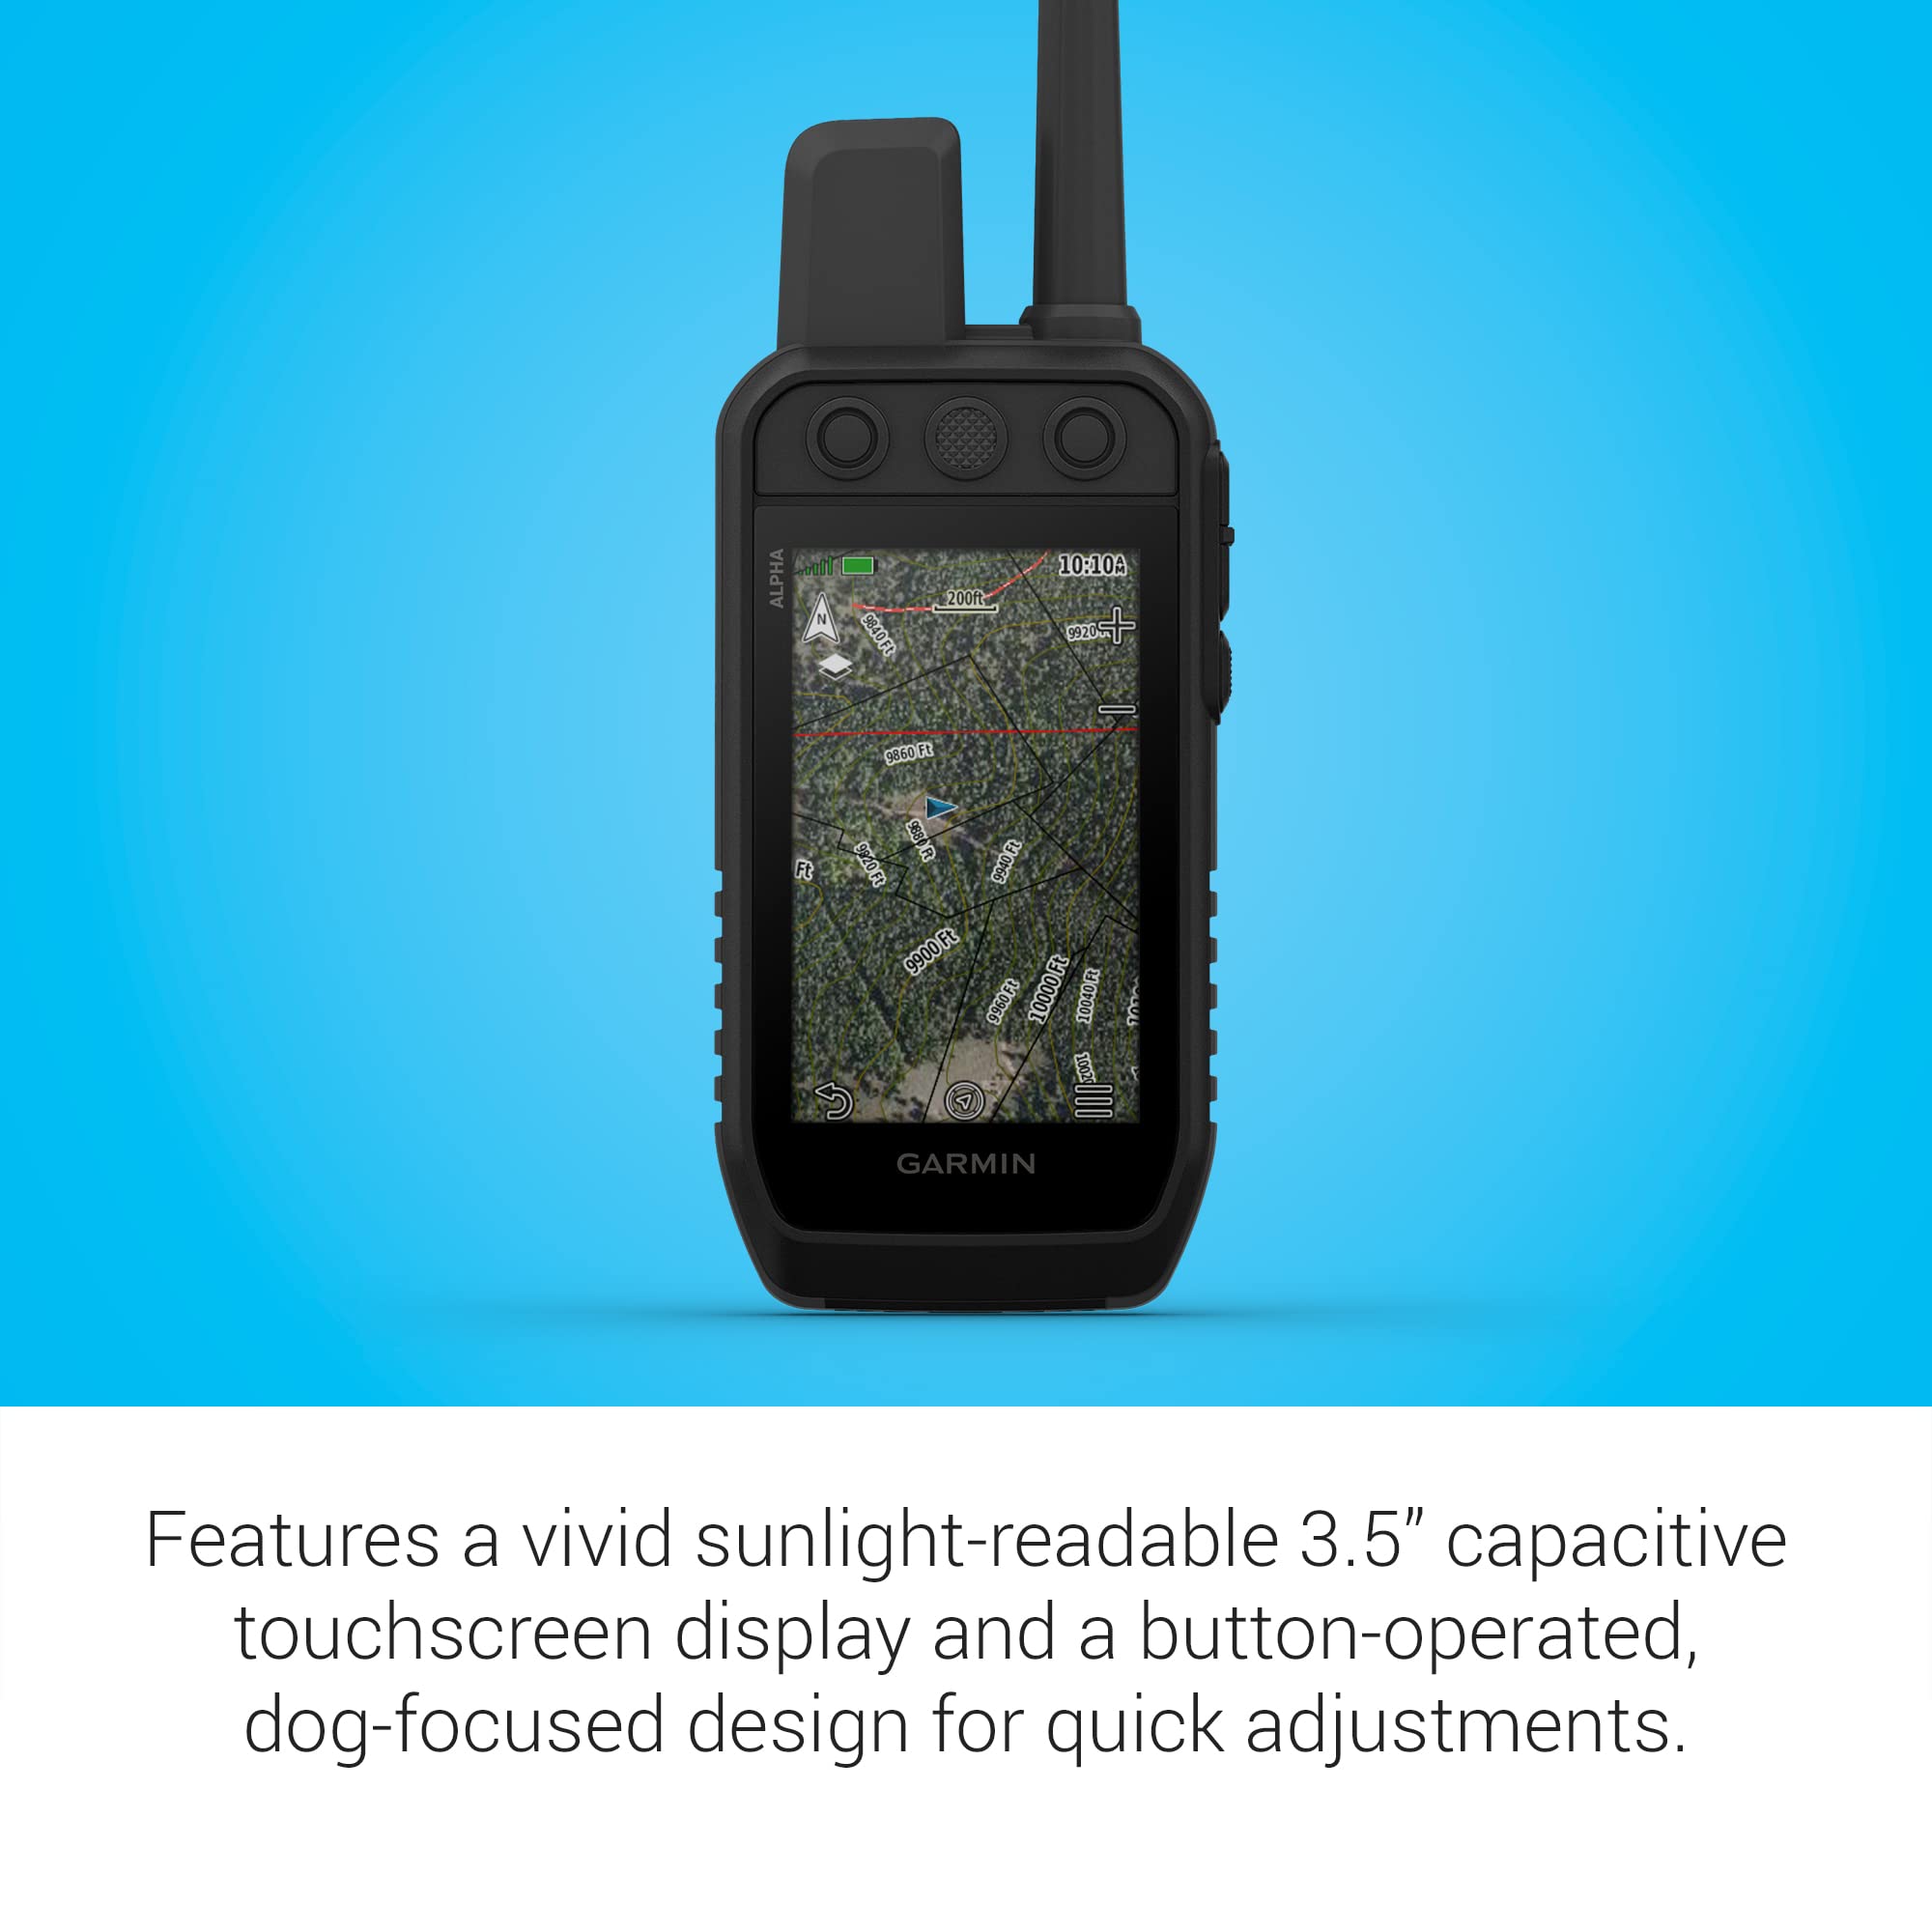 Garmin Alpha 300 Handheld, Advanced Tracking and Training Handheld